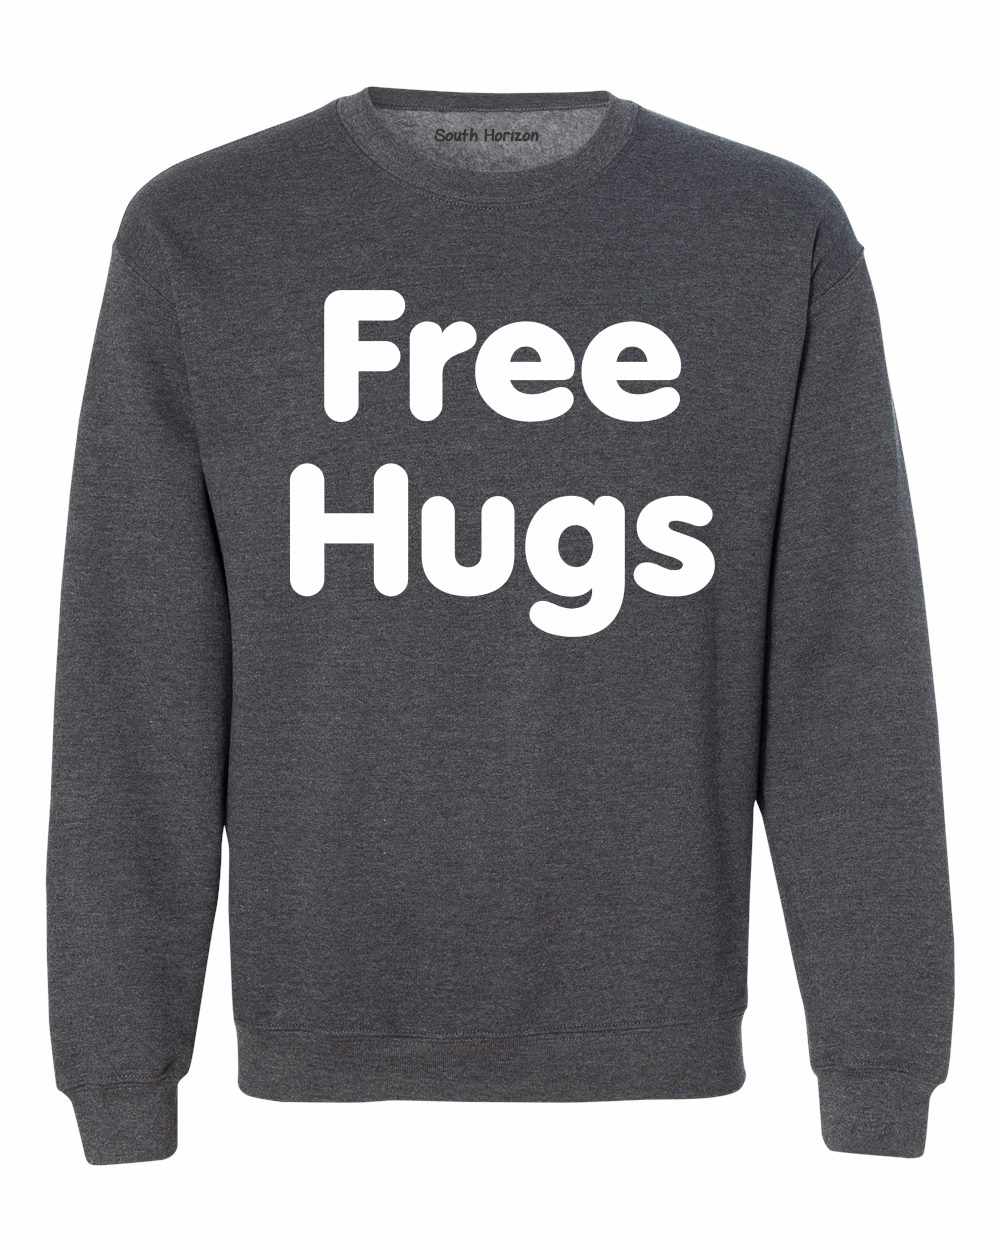 FREE HUGS on SweatShirt (#572-11)